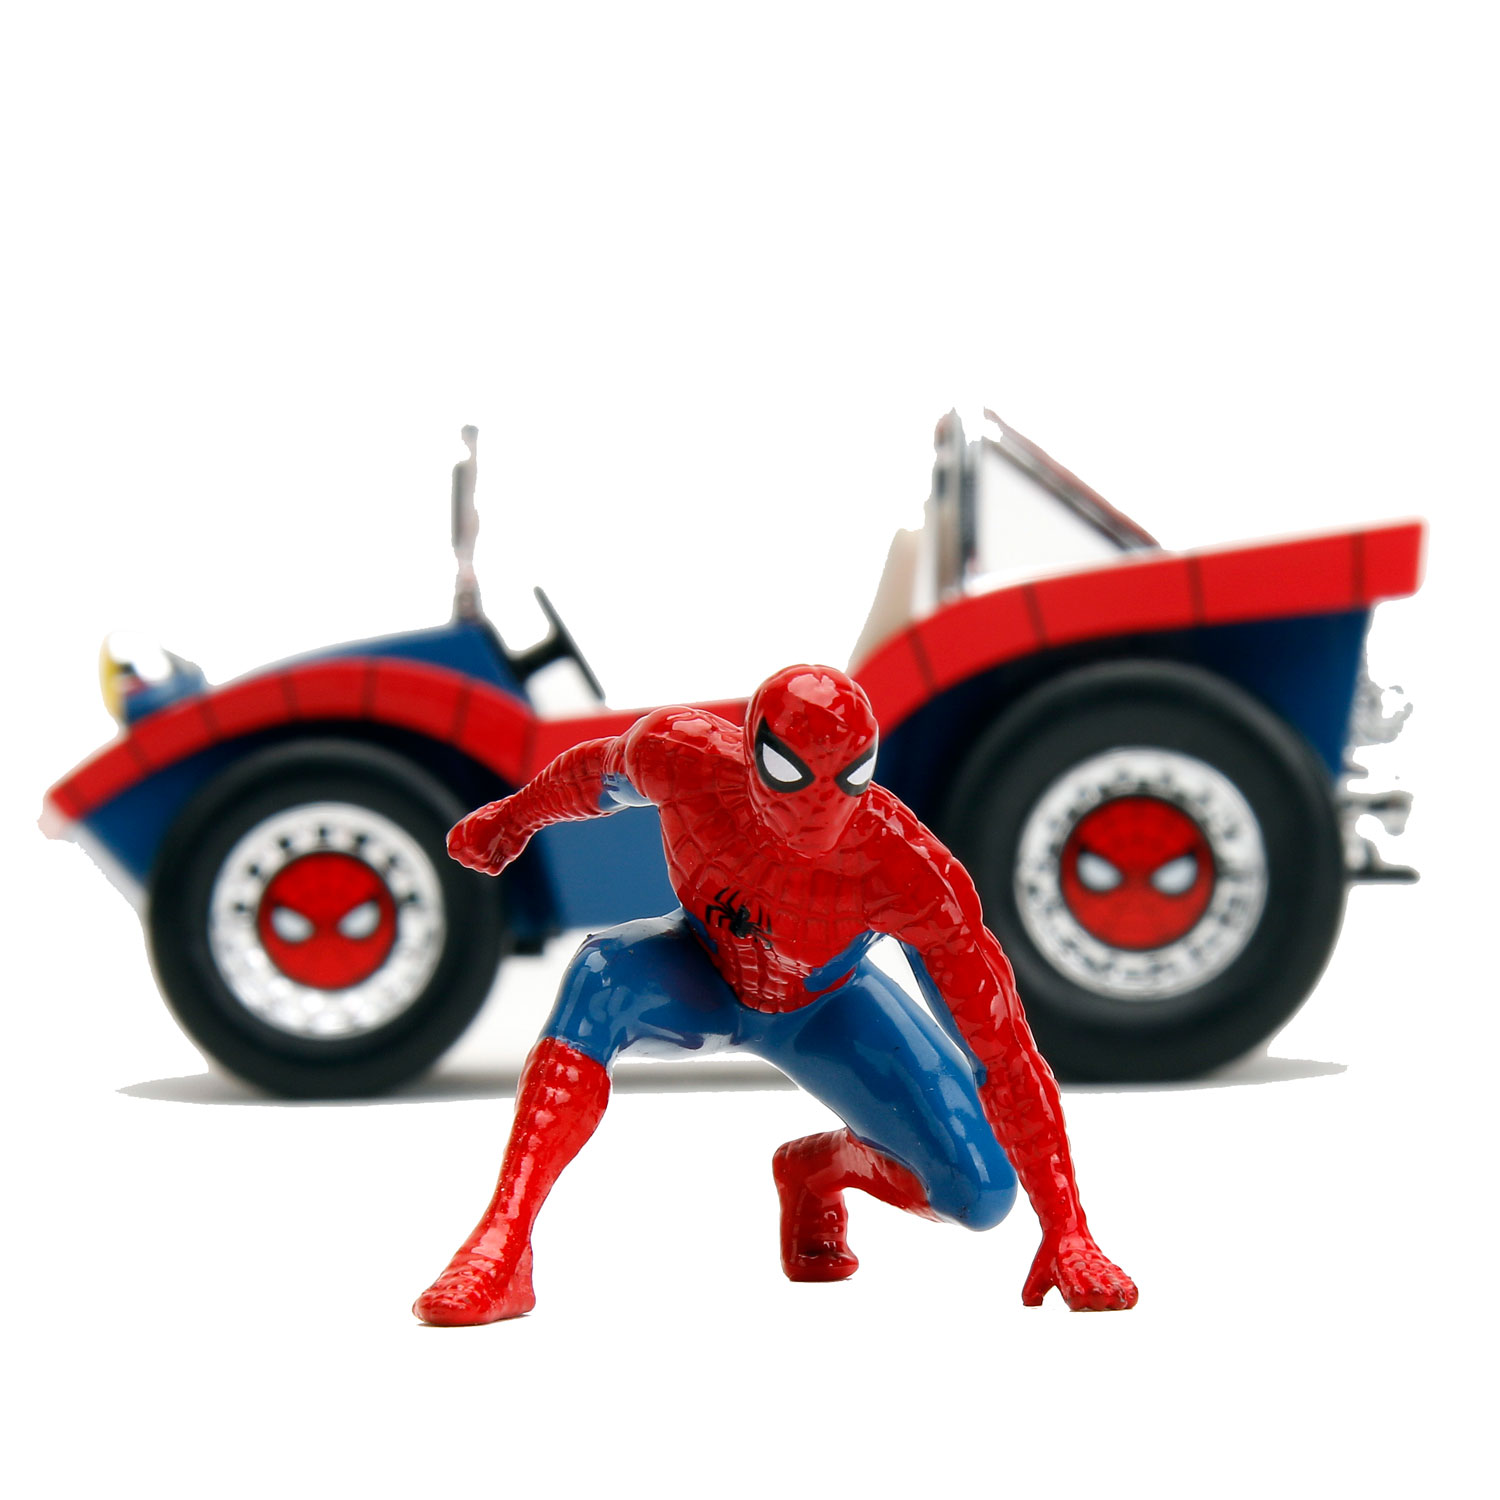 Spiderman - vehicule spider-mobile et figurine 15 cm, figurines